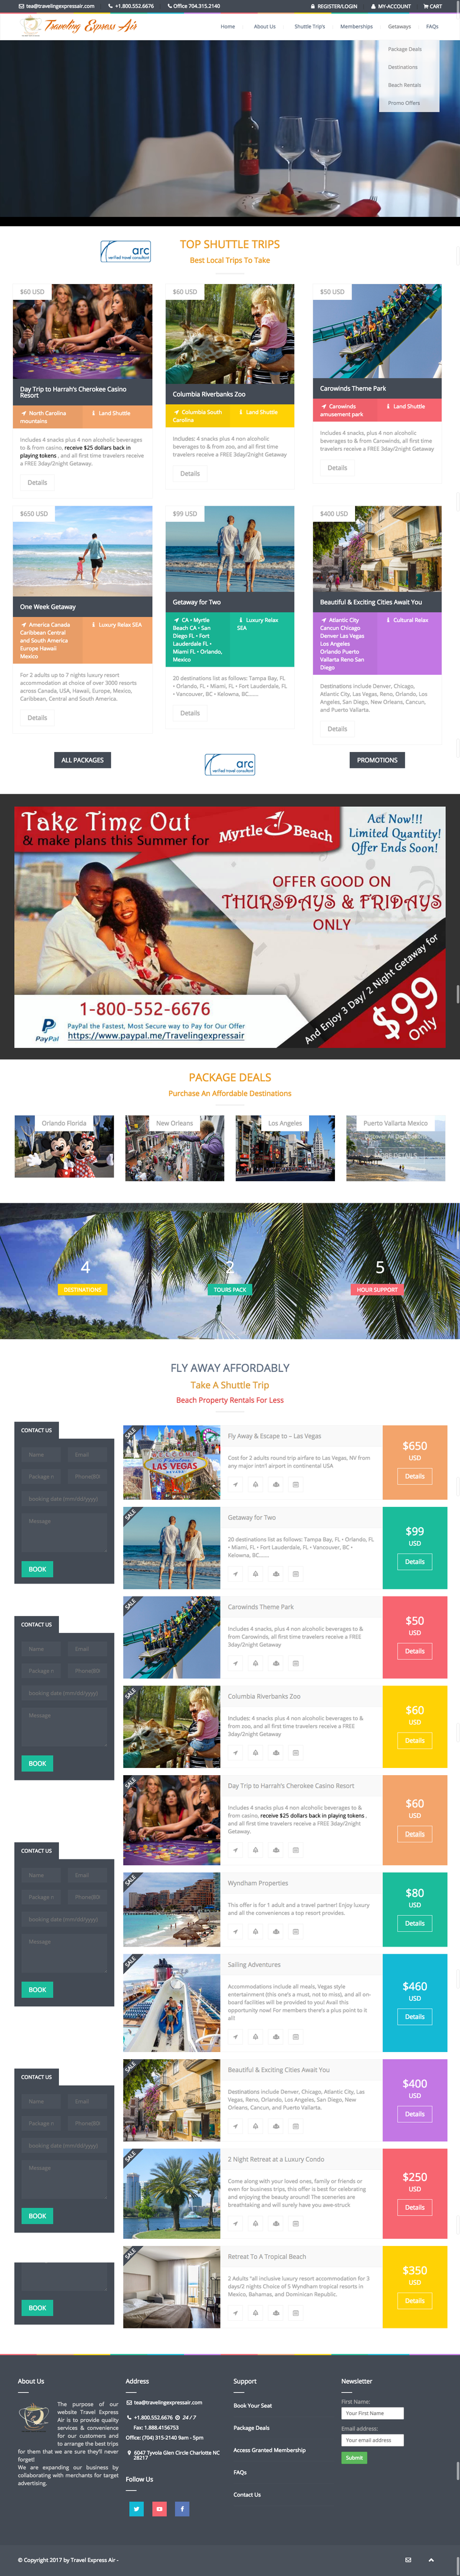 wordpress ecommerce travel agency